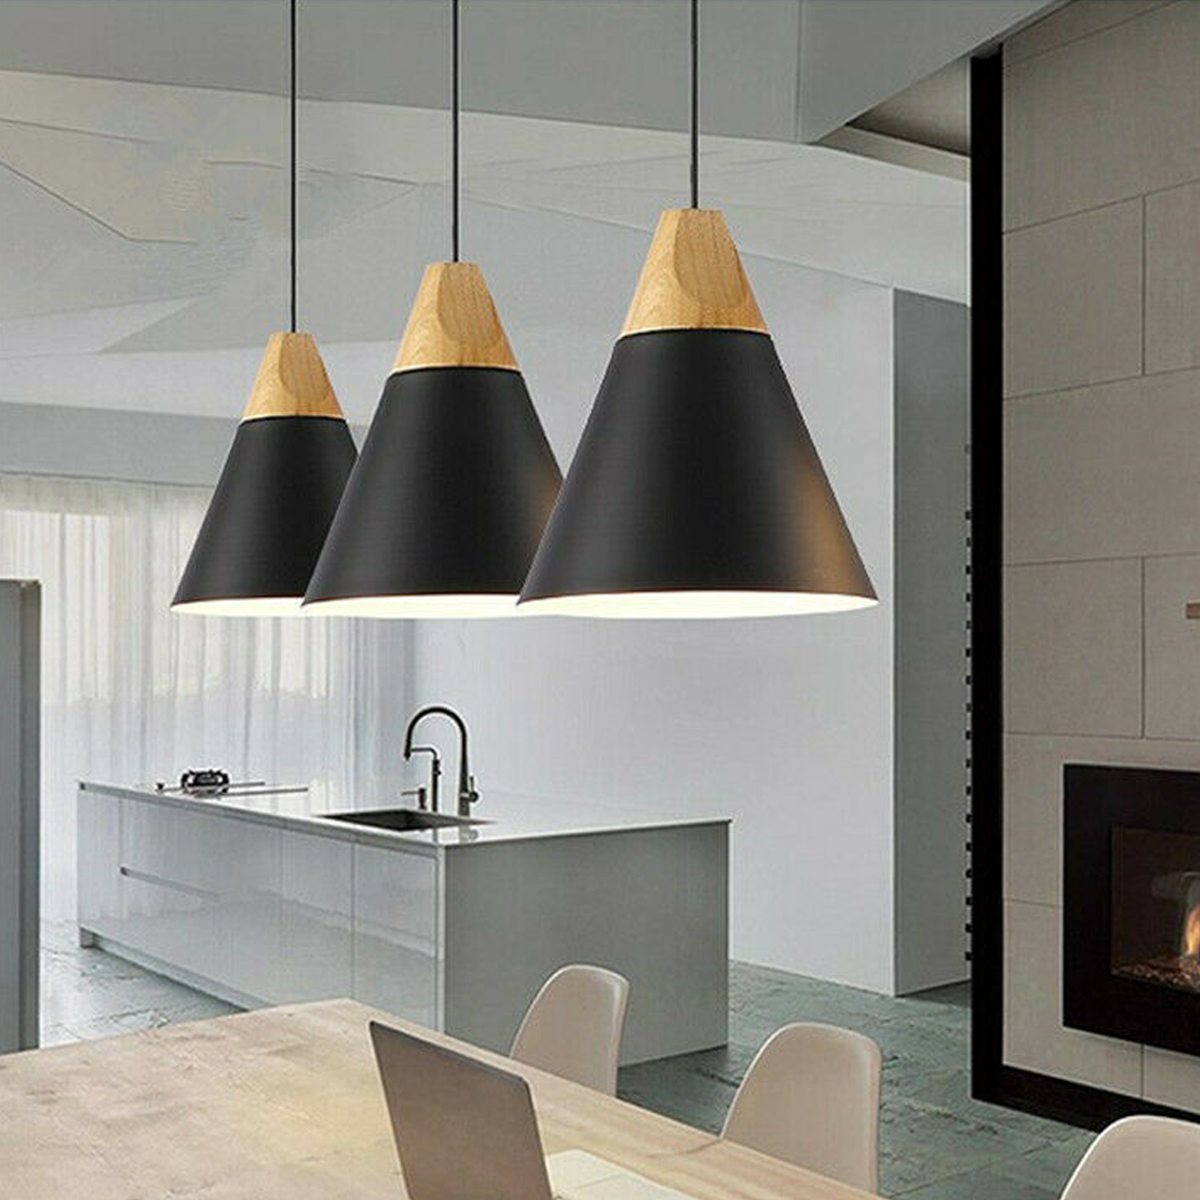 Modern-Pendant-Lighting-Nordic-Minimalist-Pendant-Lights-Over-Dining-Table-Kitchen-Island-Hanging-La-1786441-6